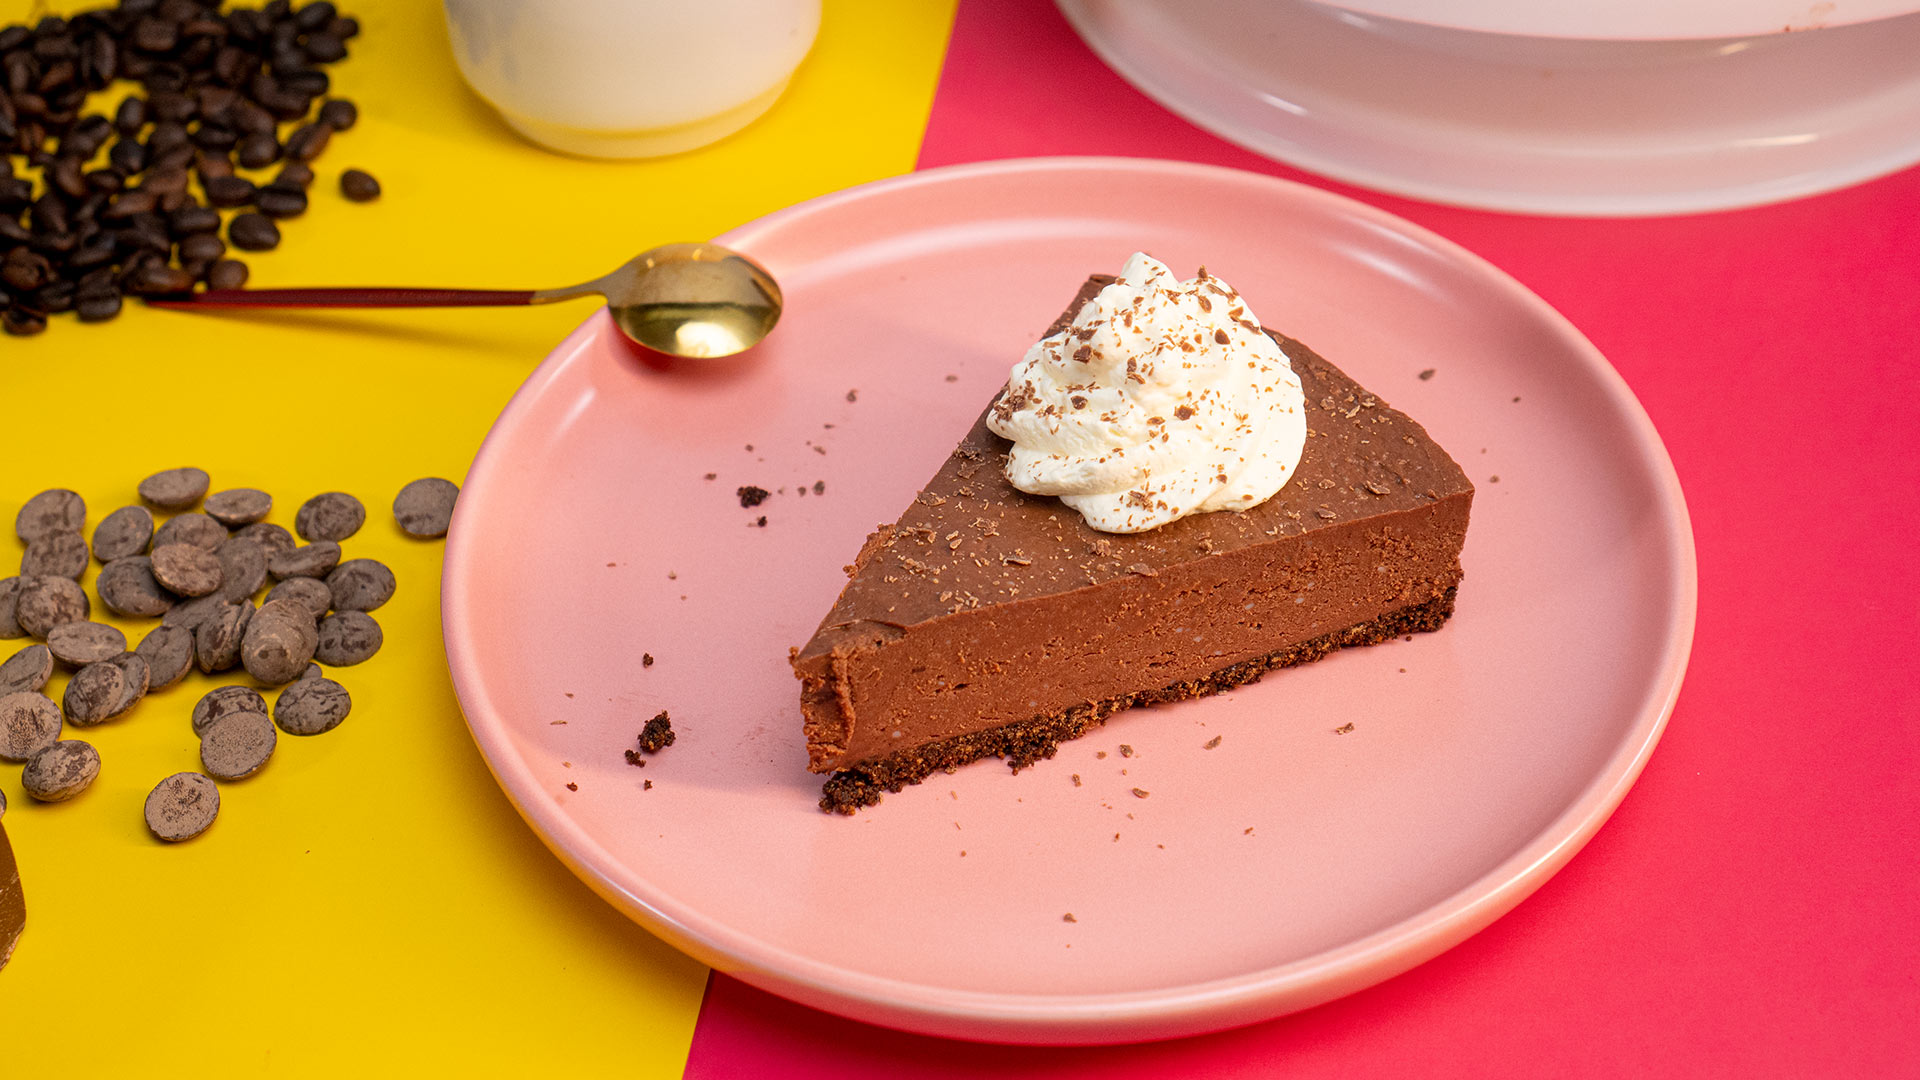 https://recipes.net/wp-content/uploads/2020/03/easy-3-step-no-bake-chocolate-cheesecake-recipes.jpg